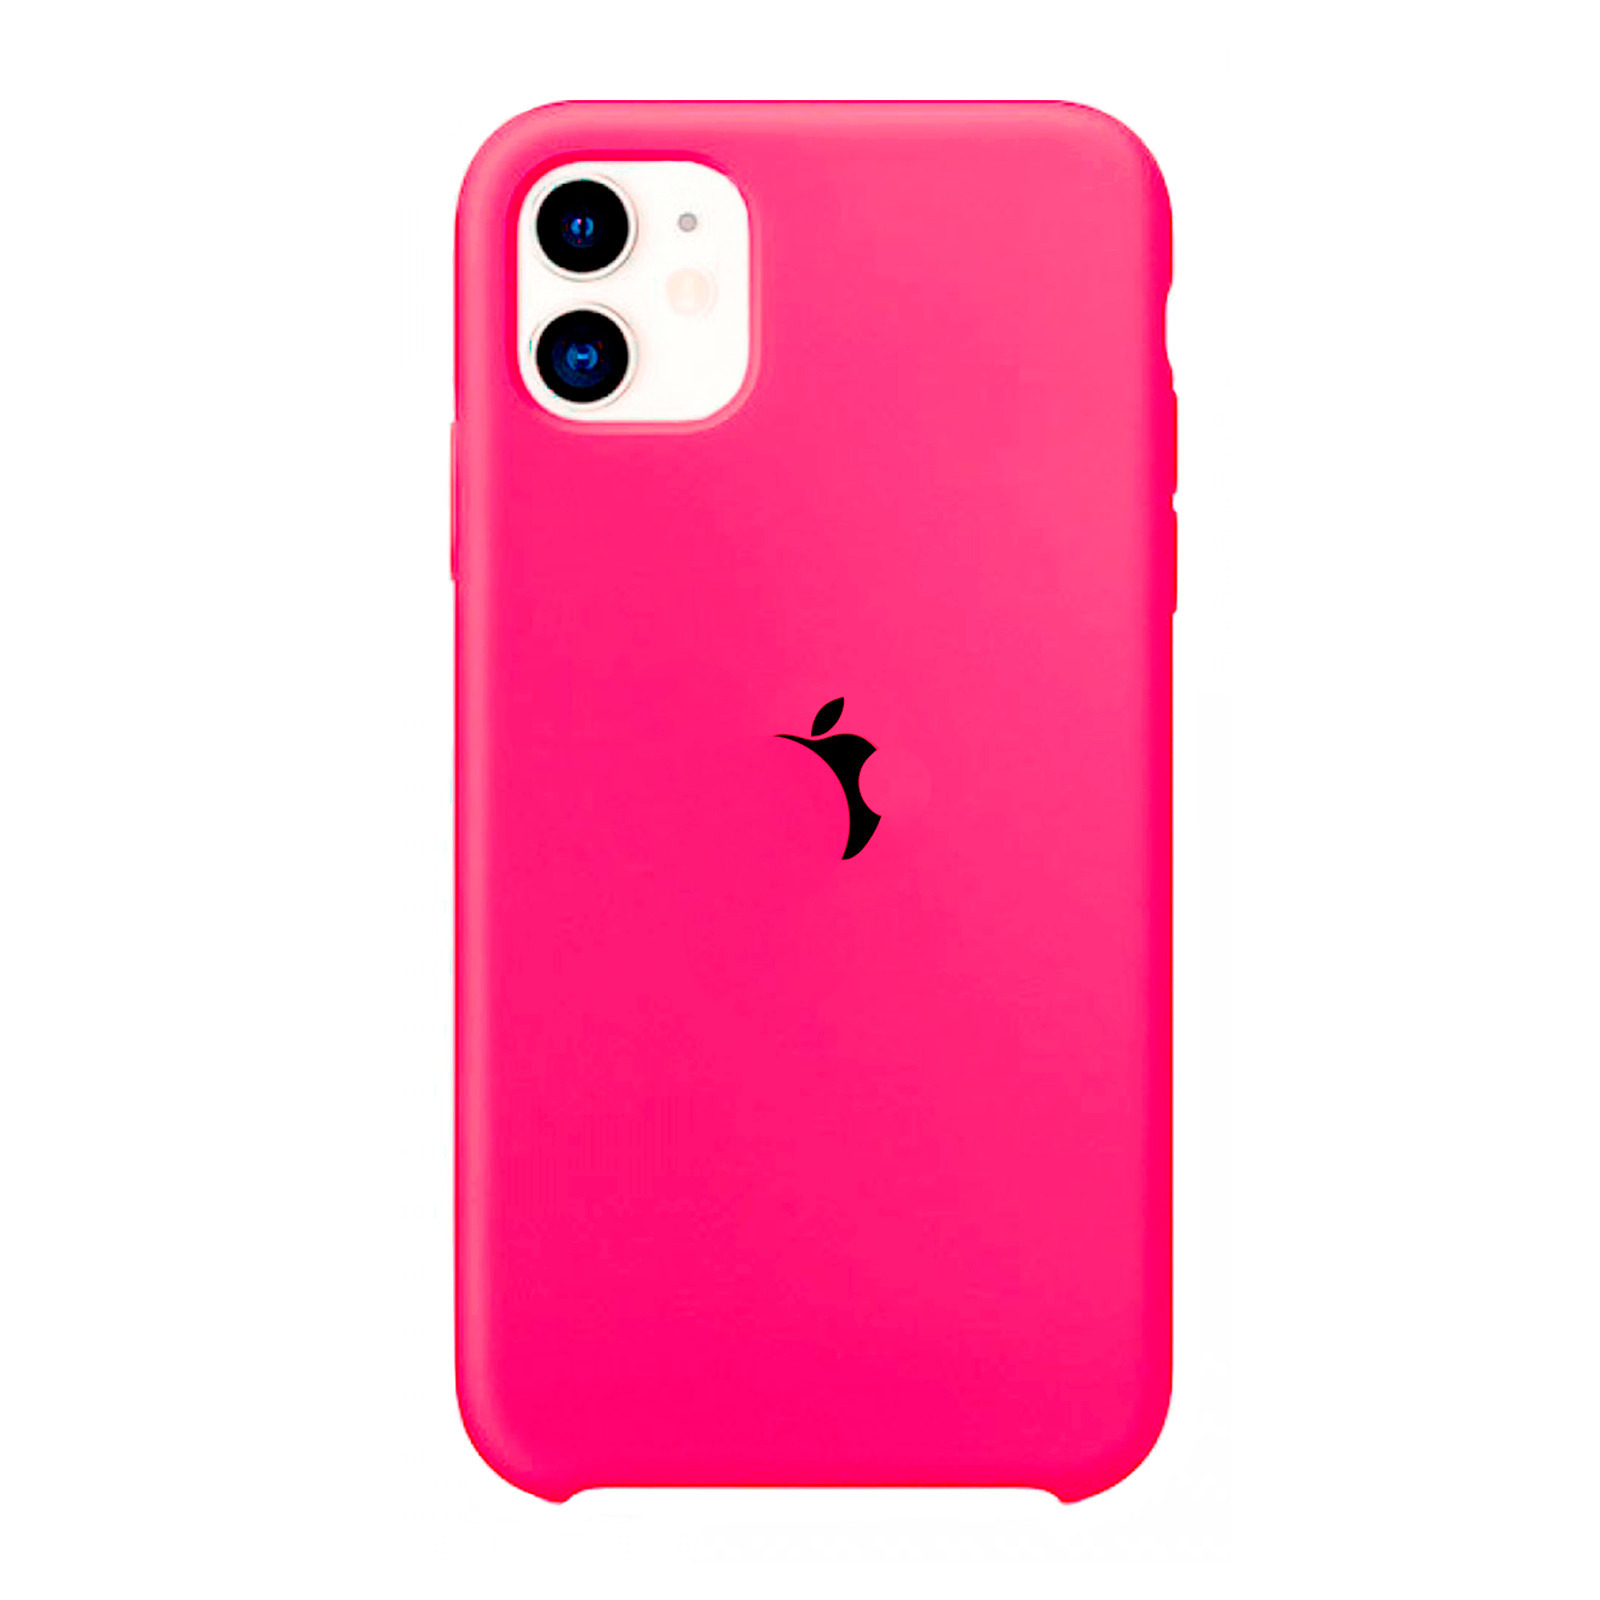 15 512 розовый. Чехол на айфон 11. Iphone 11 Pink. Iphone 11 Silicone Case Cactus (mxyw2zm/a). Розовый чехол на айфон 11.